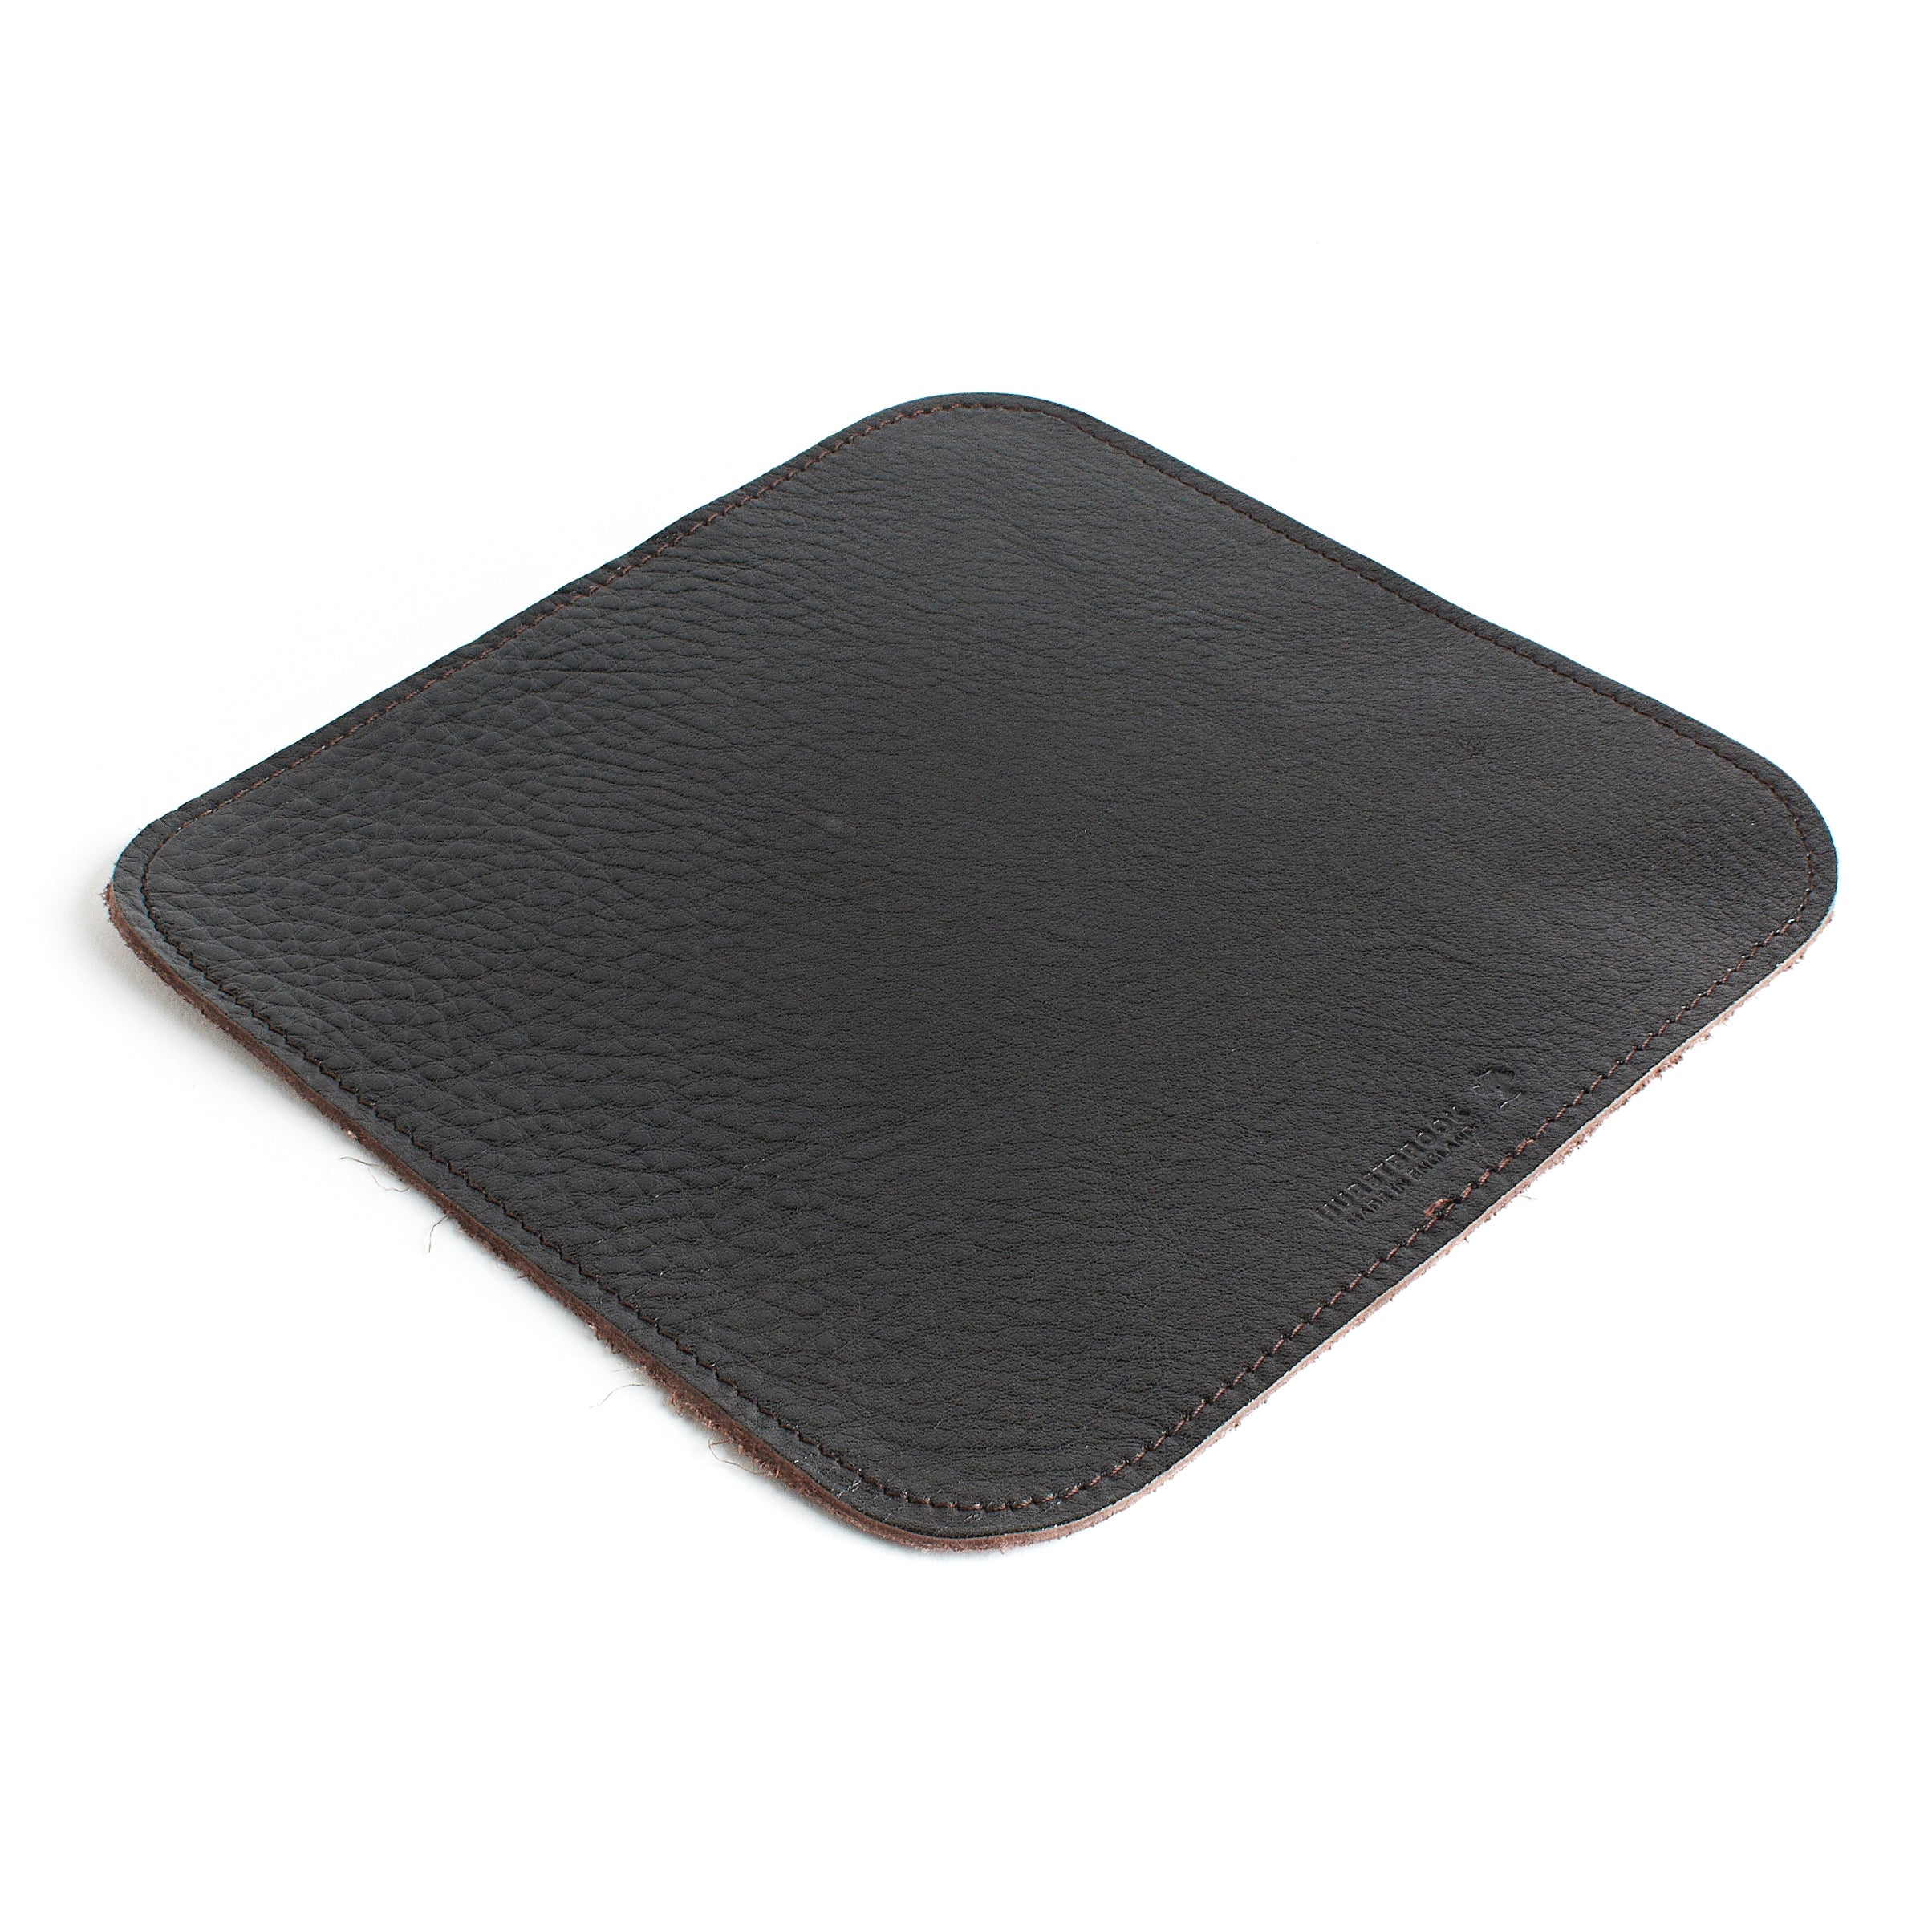 Pebble Black Leather Mouse Mat 